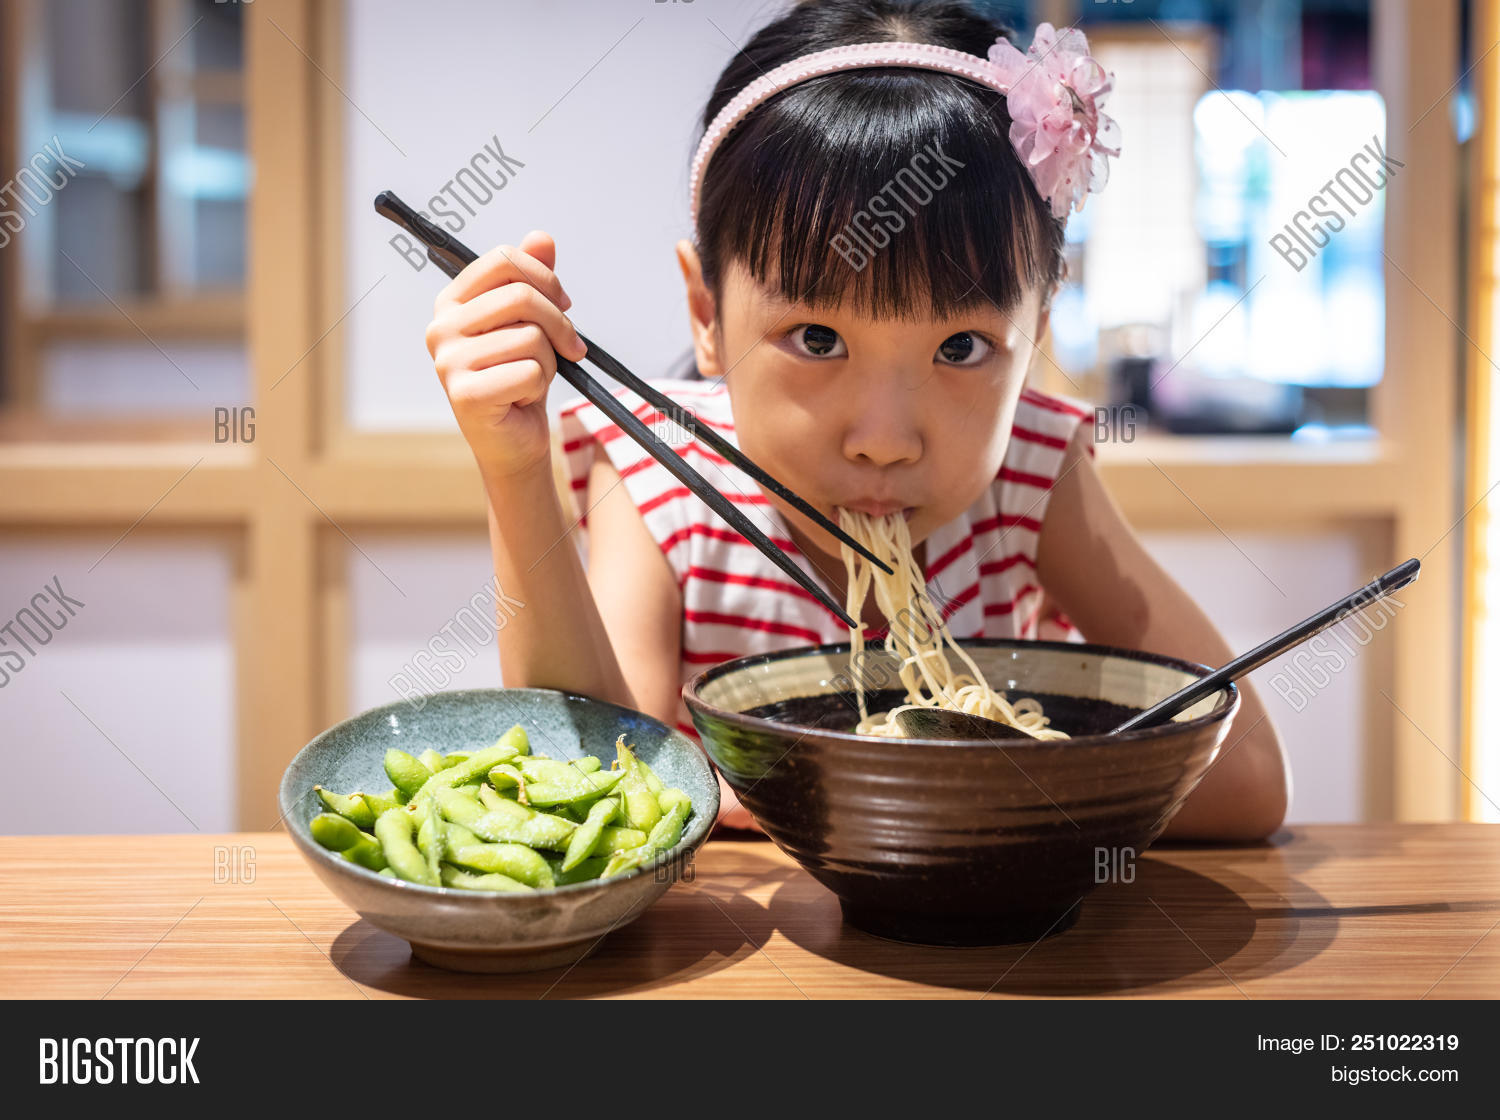 daniel macrina add japanese girl eating noodles photo